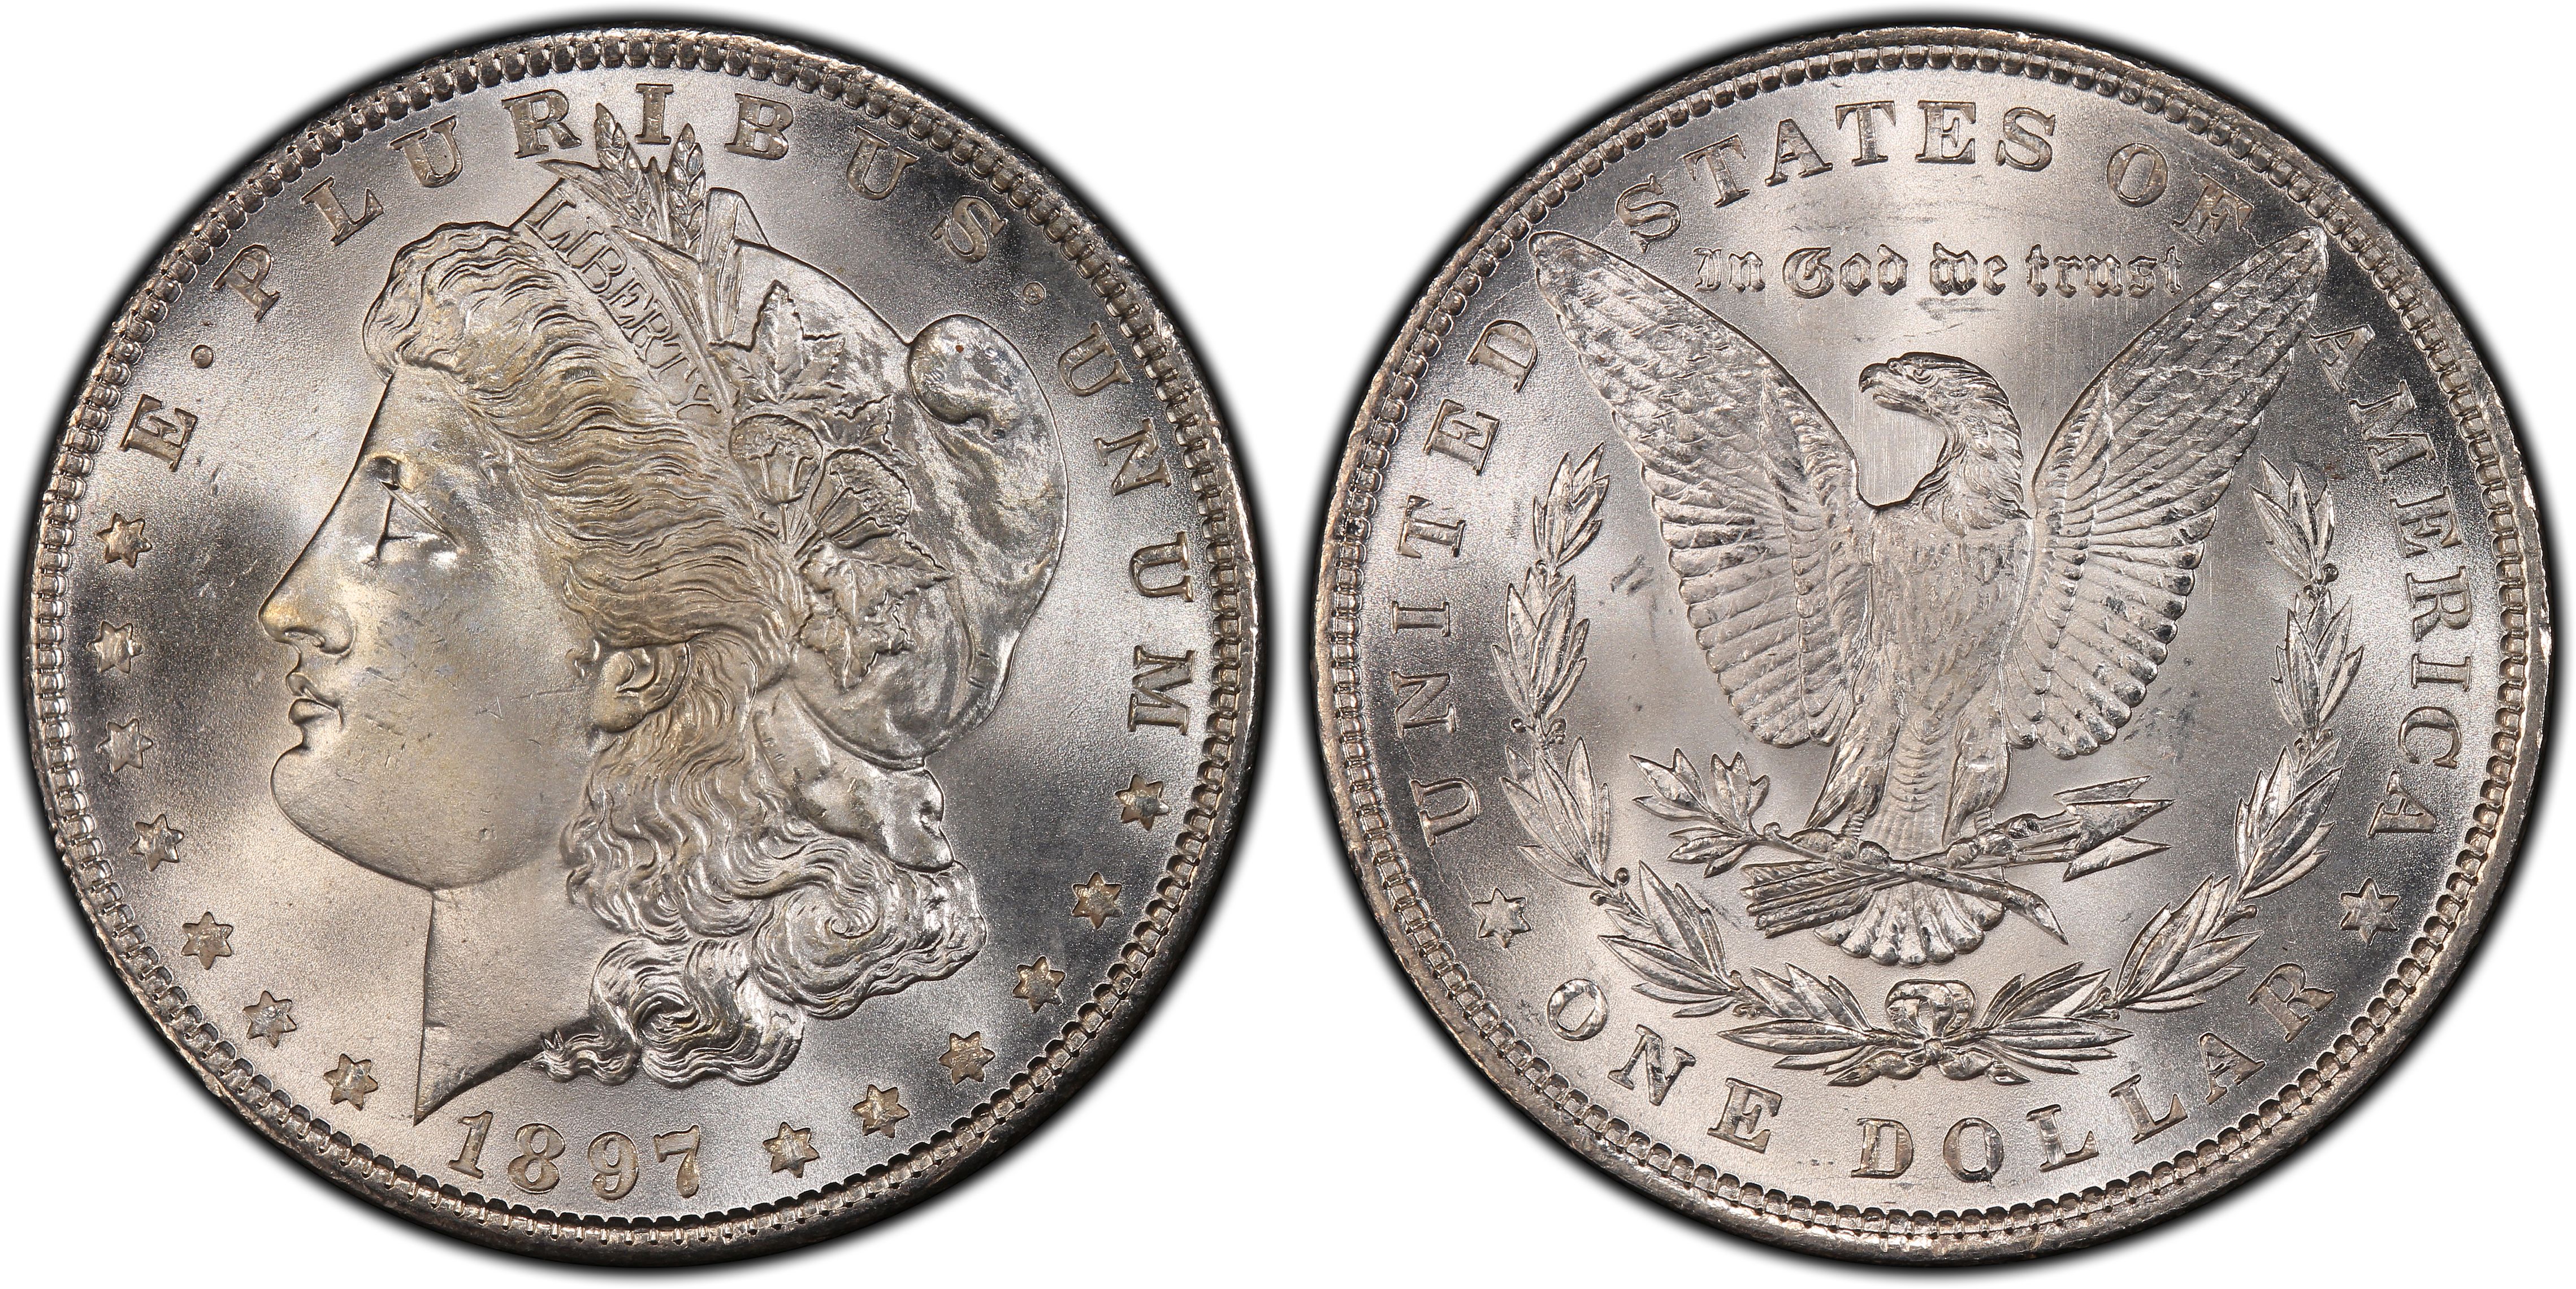 PCGS 1897  MS64 Morgan Dollars